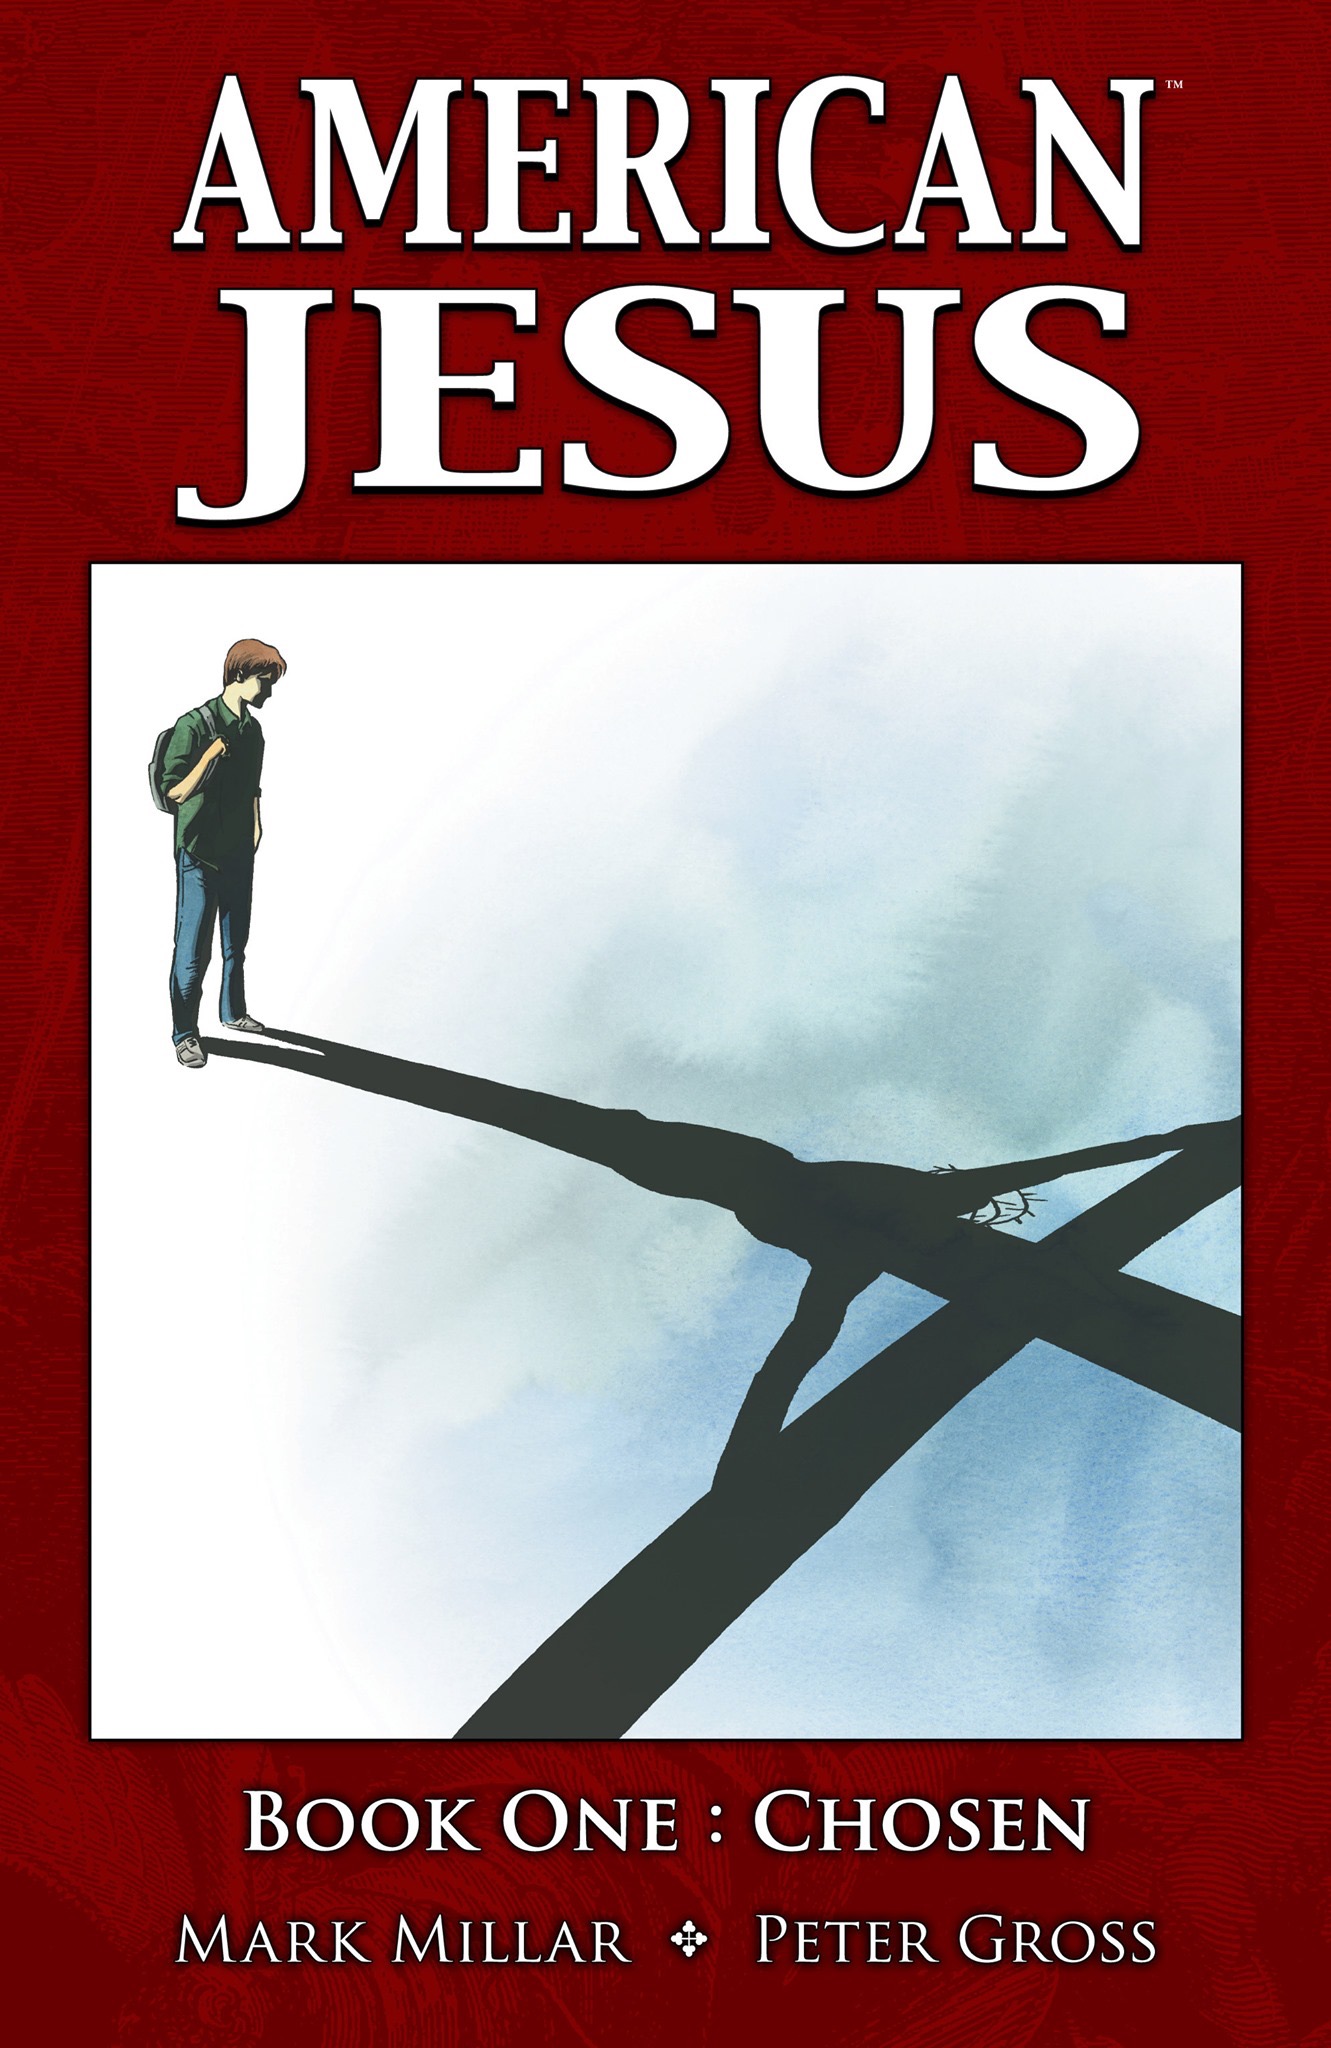 americak jesus - American Jesus Book One Chosen Mark Millar Peter Gross